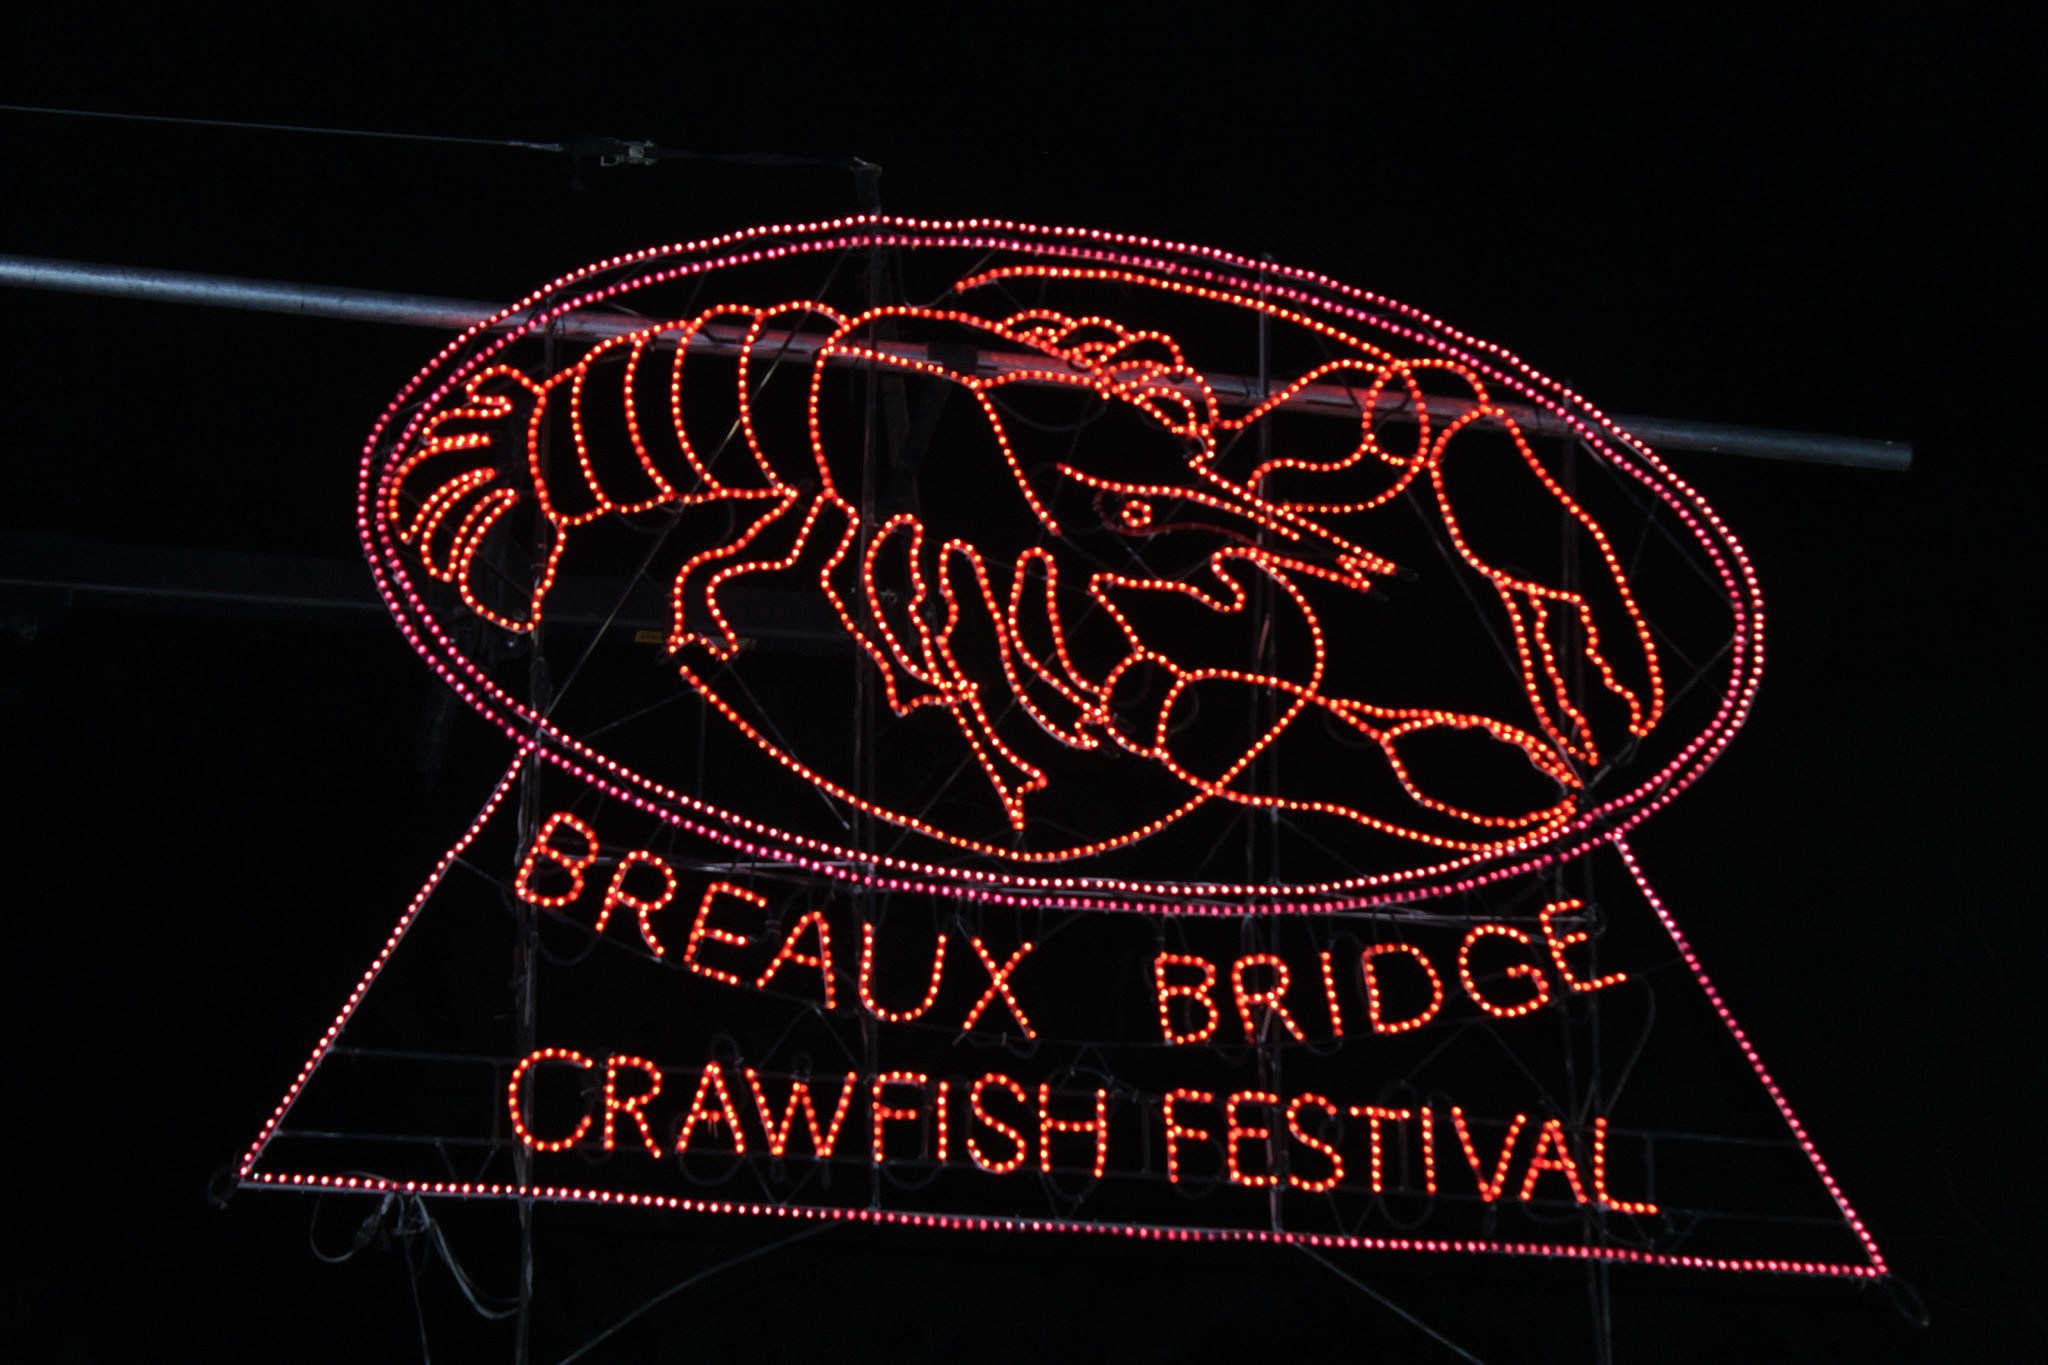 Breaux Bridge Crawfish Festival Poster Art Revealed